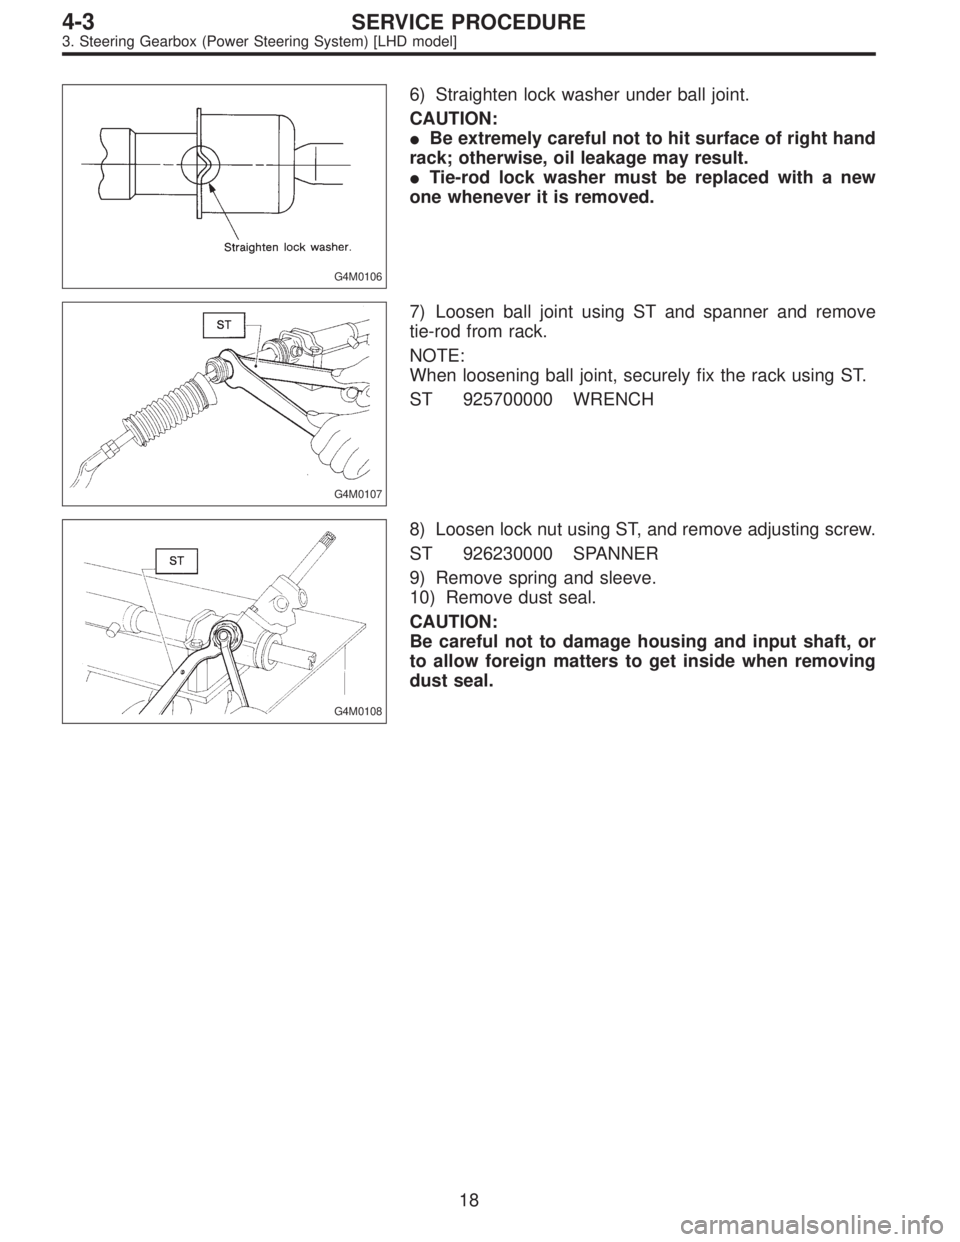 SUBARU LEGACY 1995  Service Repair Manual G4M0106
6) Straighten lock washer under ball joint.
CAUTION:
Be extremely careful not to hit surface of right hand
rack; otherwise, oil leakage may result.
Tie-rod lock washer must be replaced with 